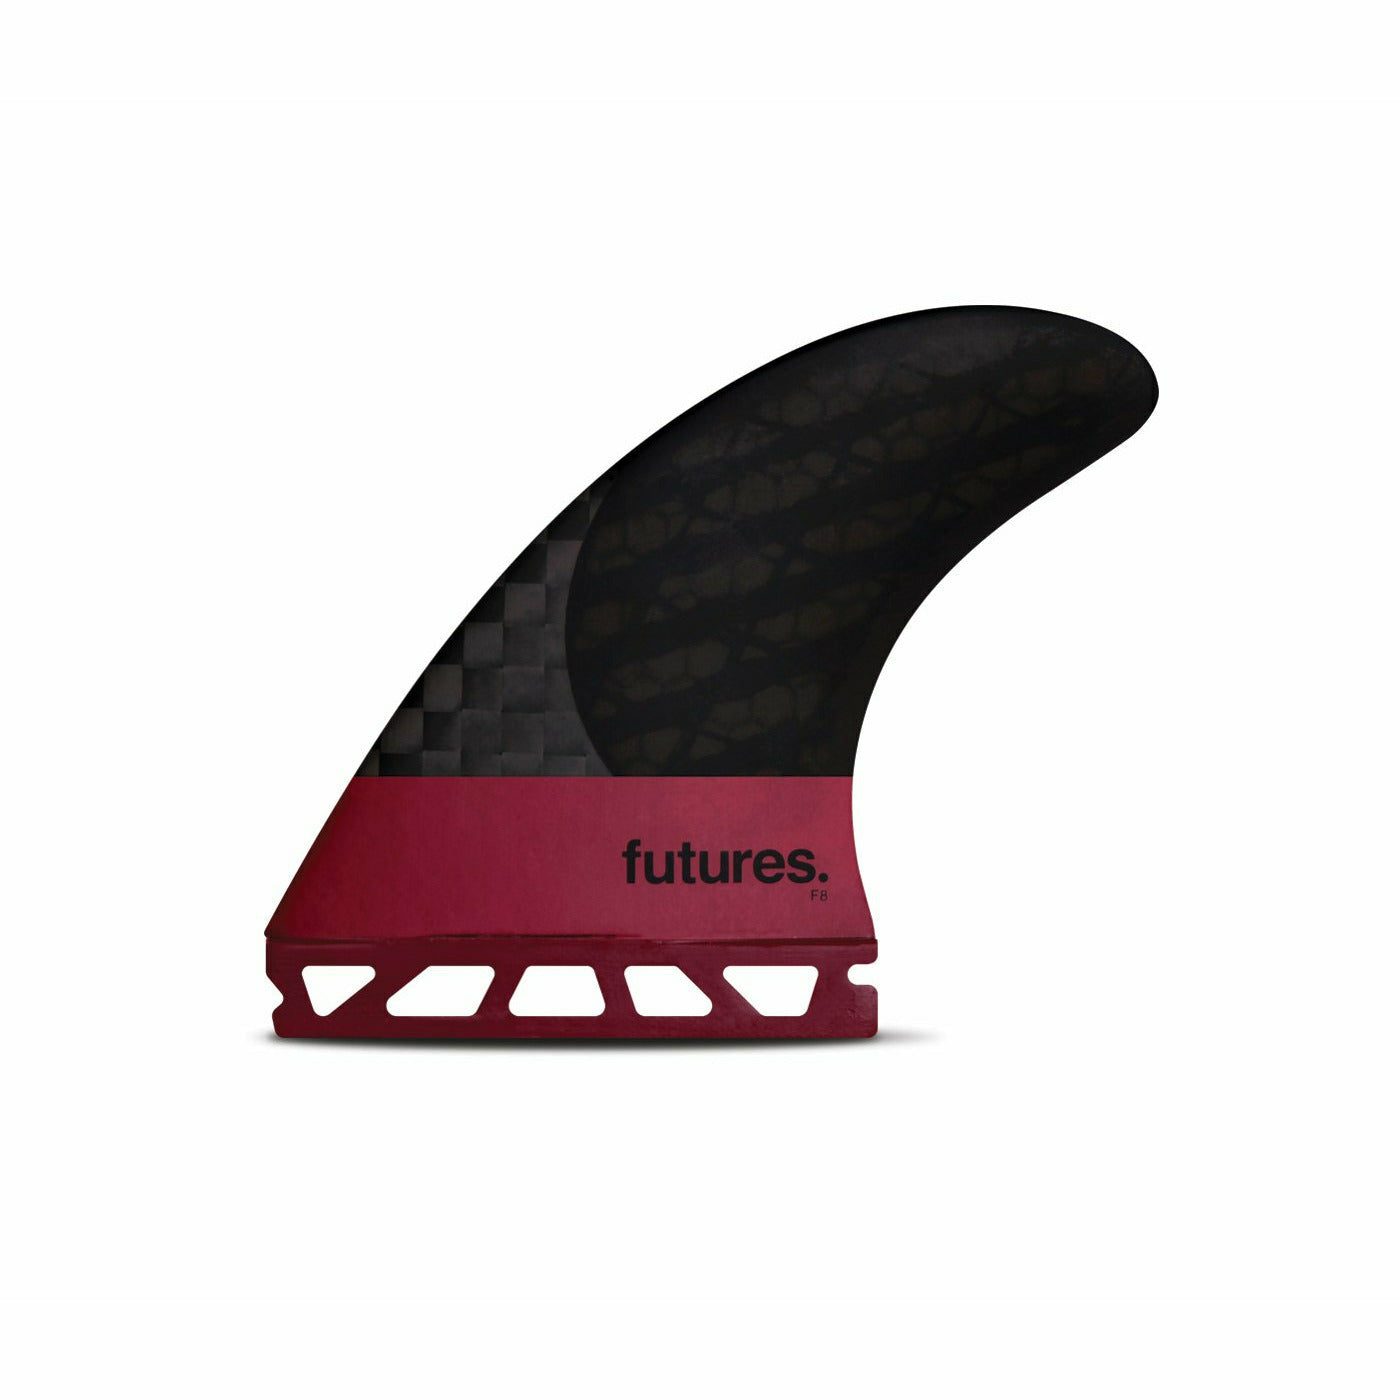 Futures - F8 Blackstix 3.0 - Large (Violet/Carbon)